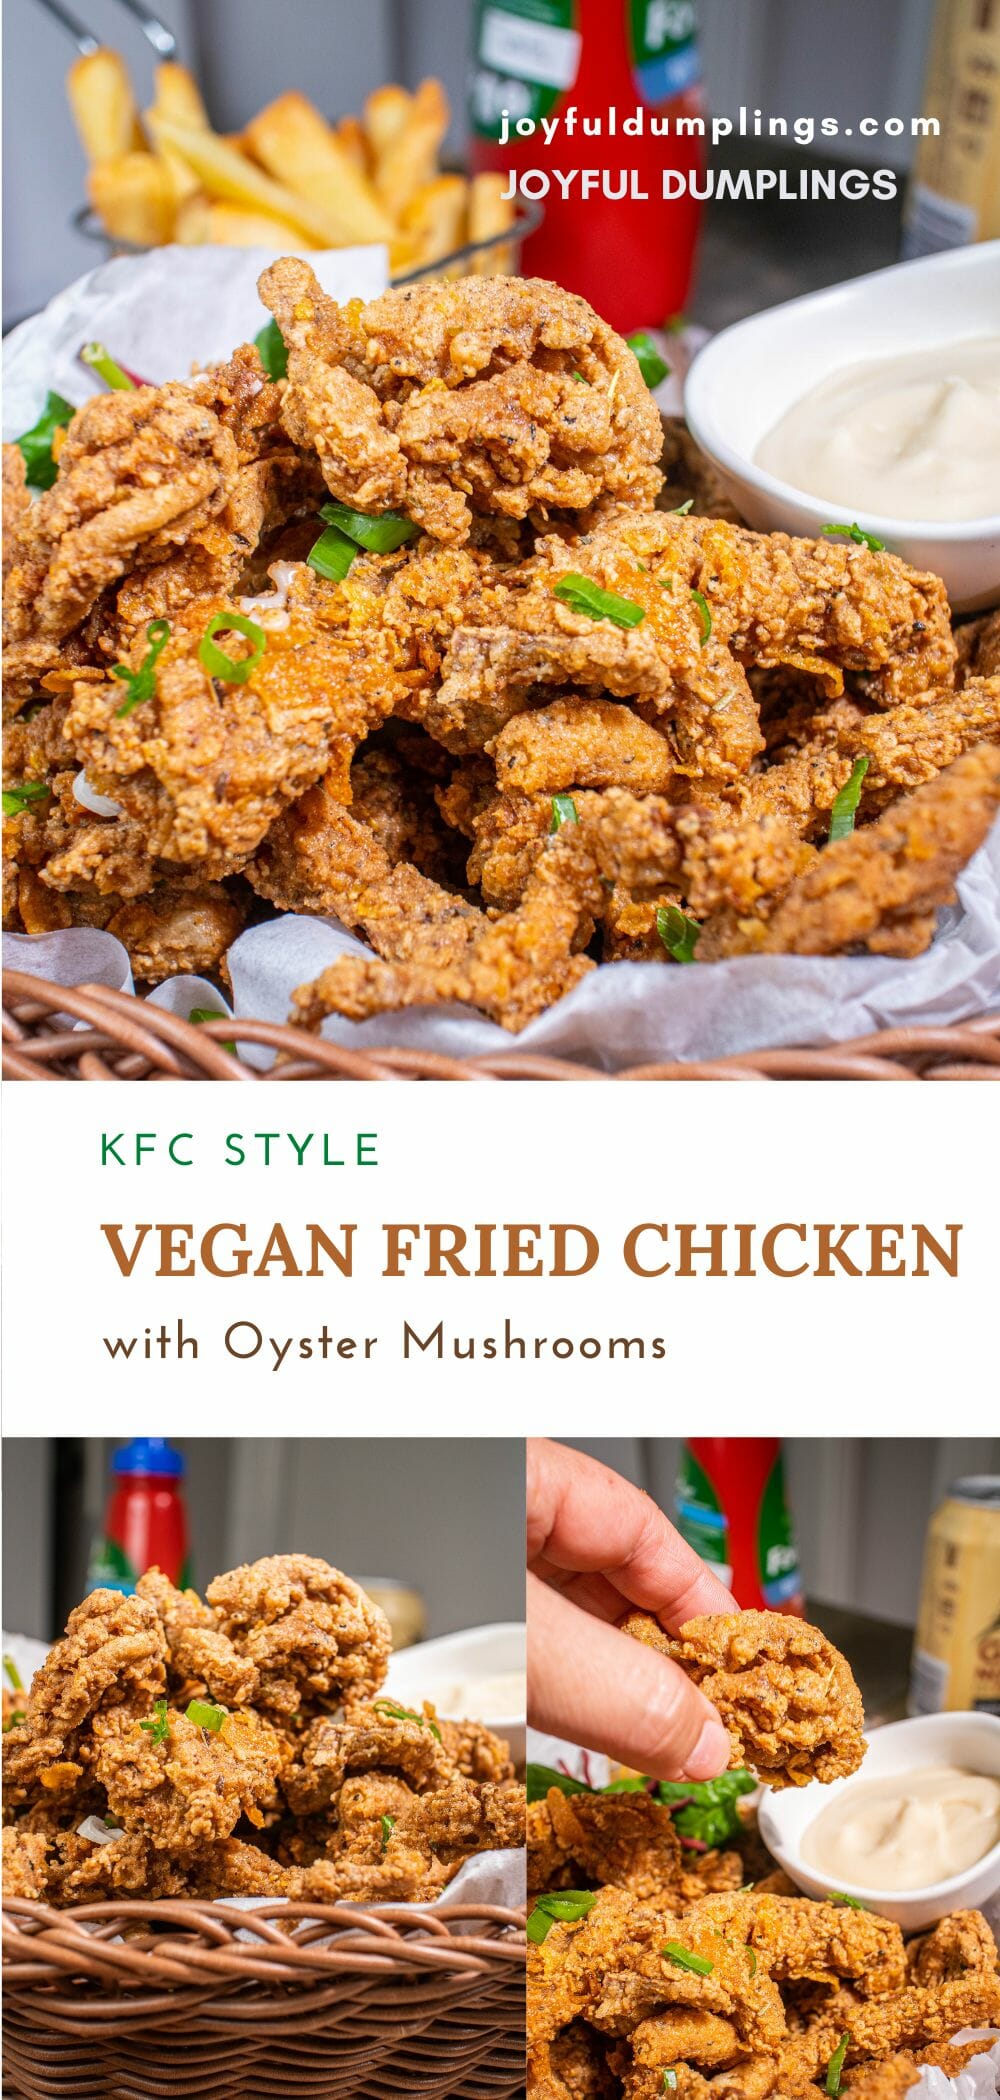 a basket of vegan fried chicken